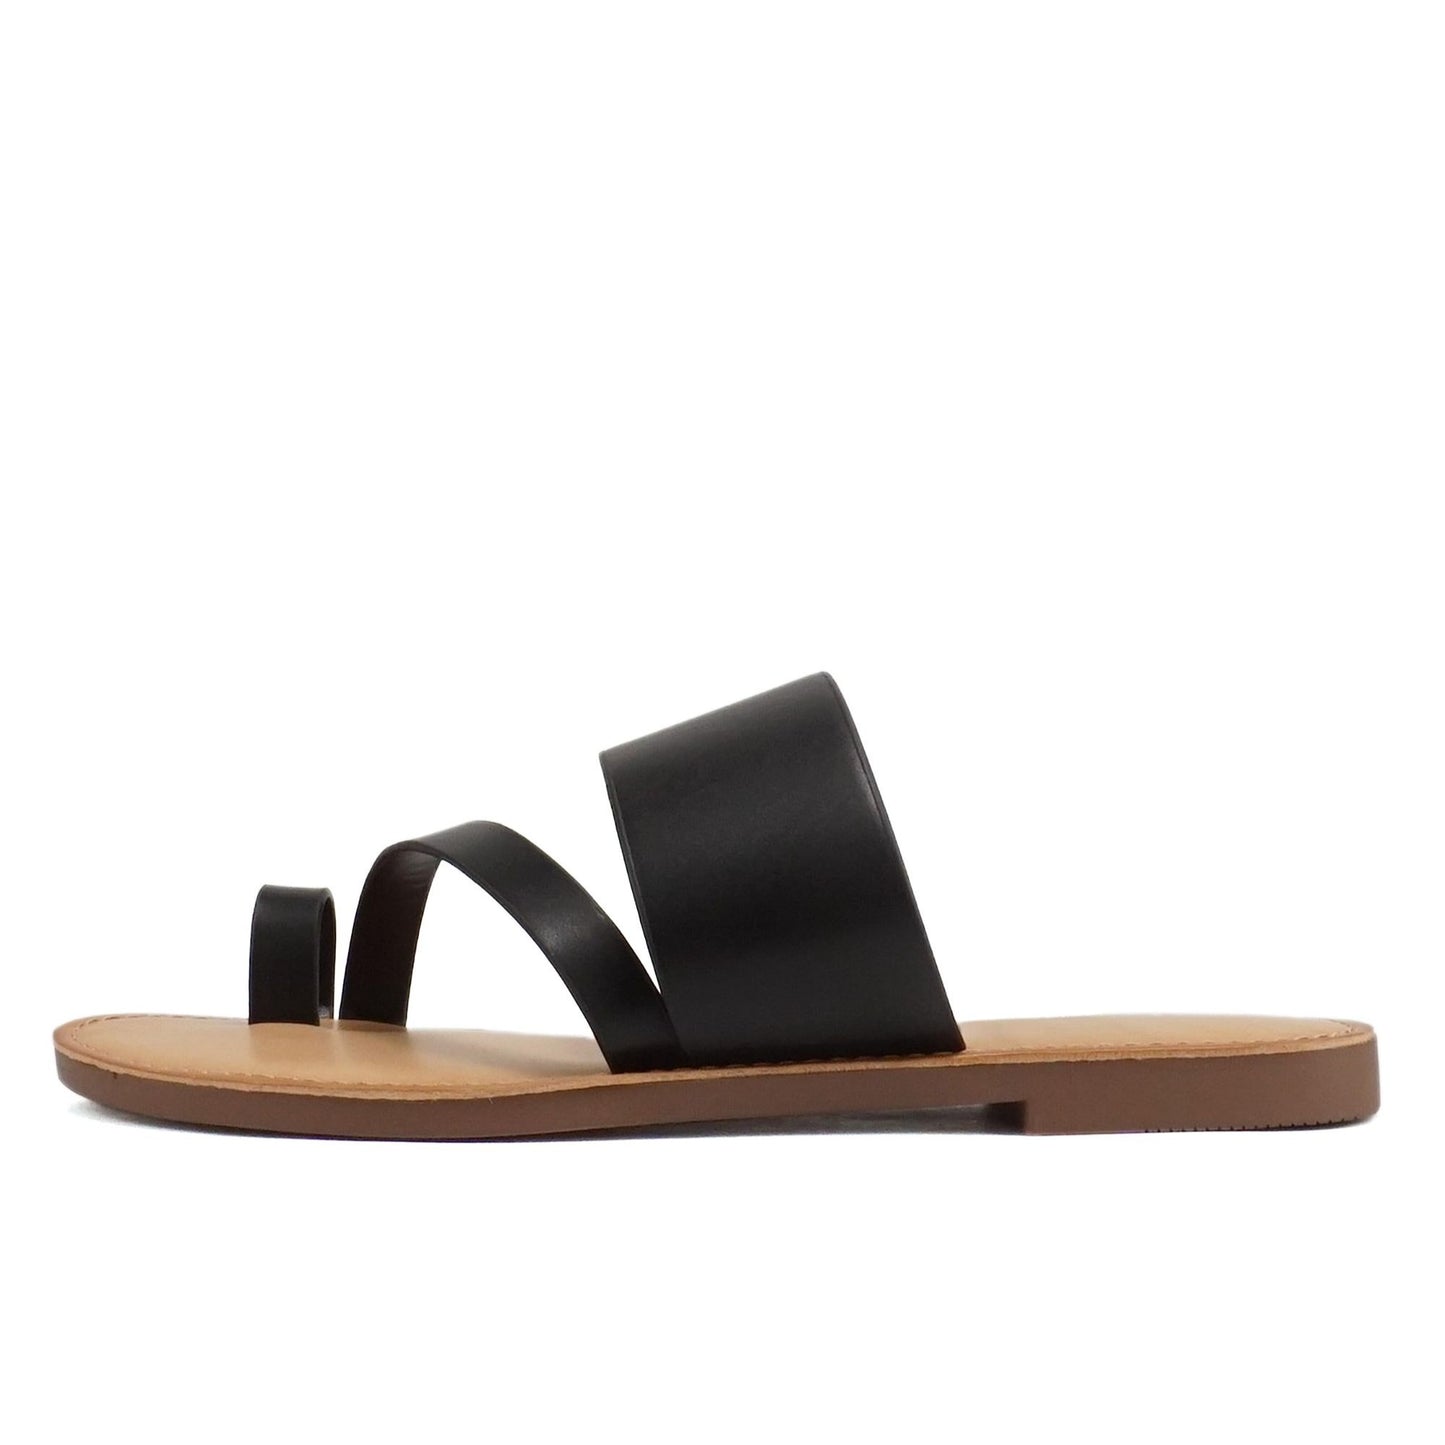 SODA Women's Black Strappy Flat Sandals - Size 7